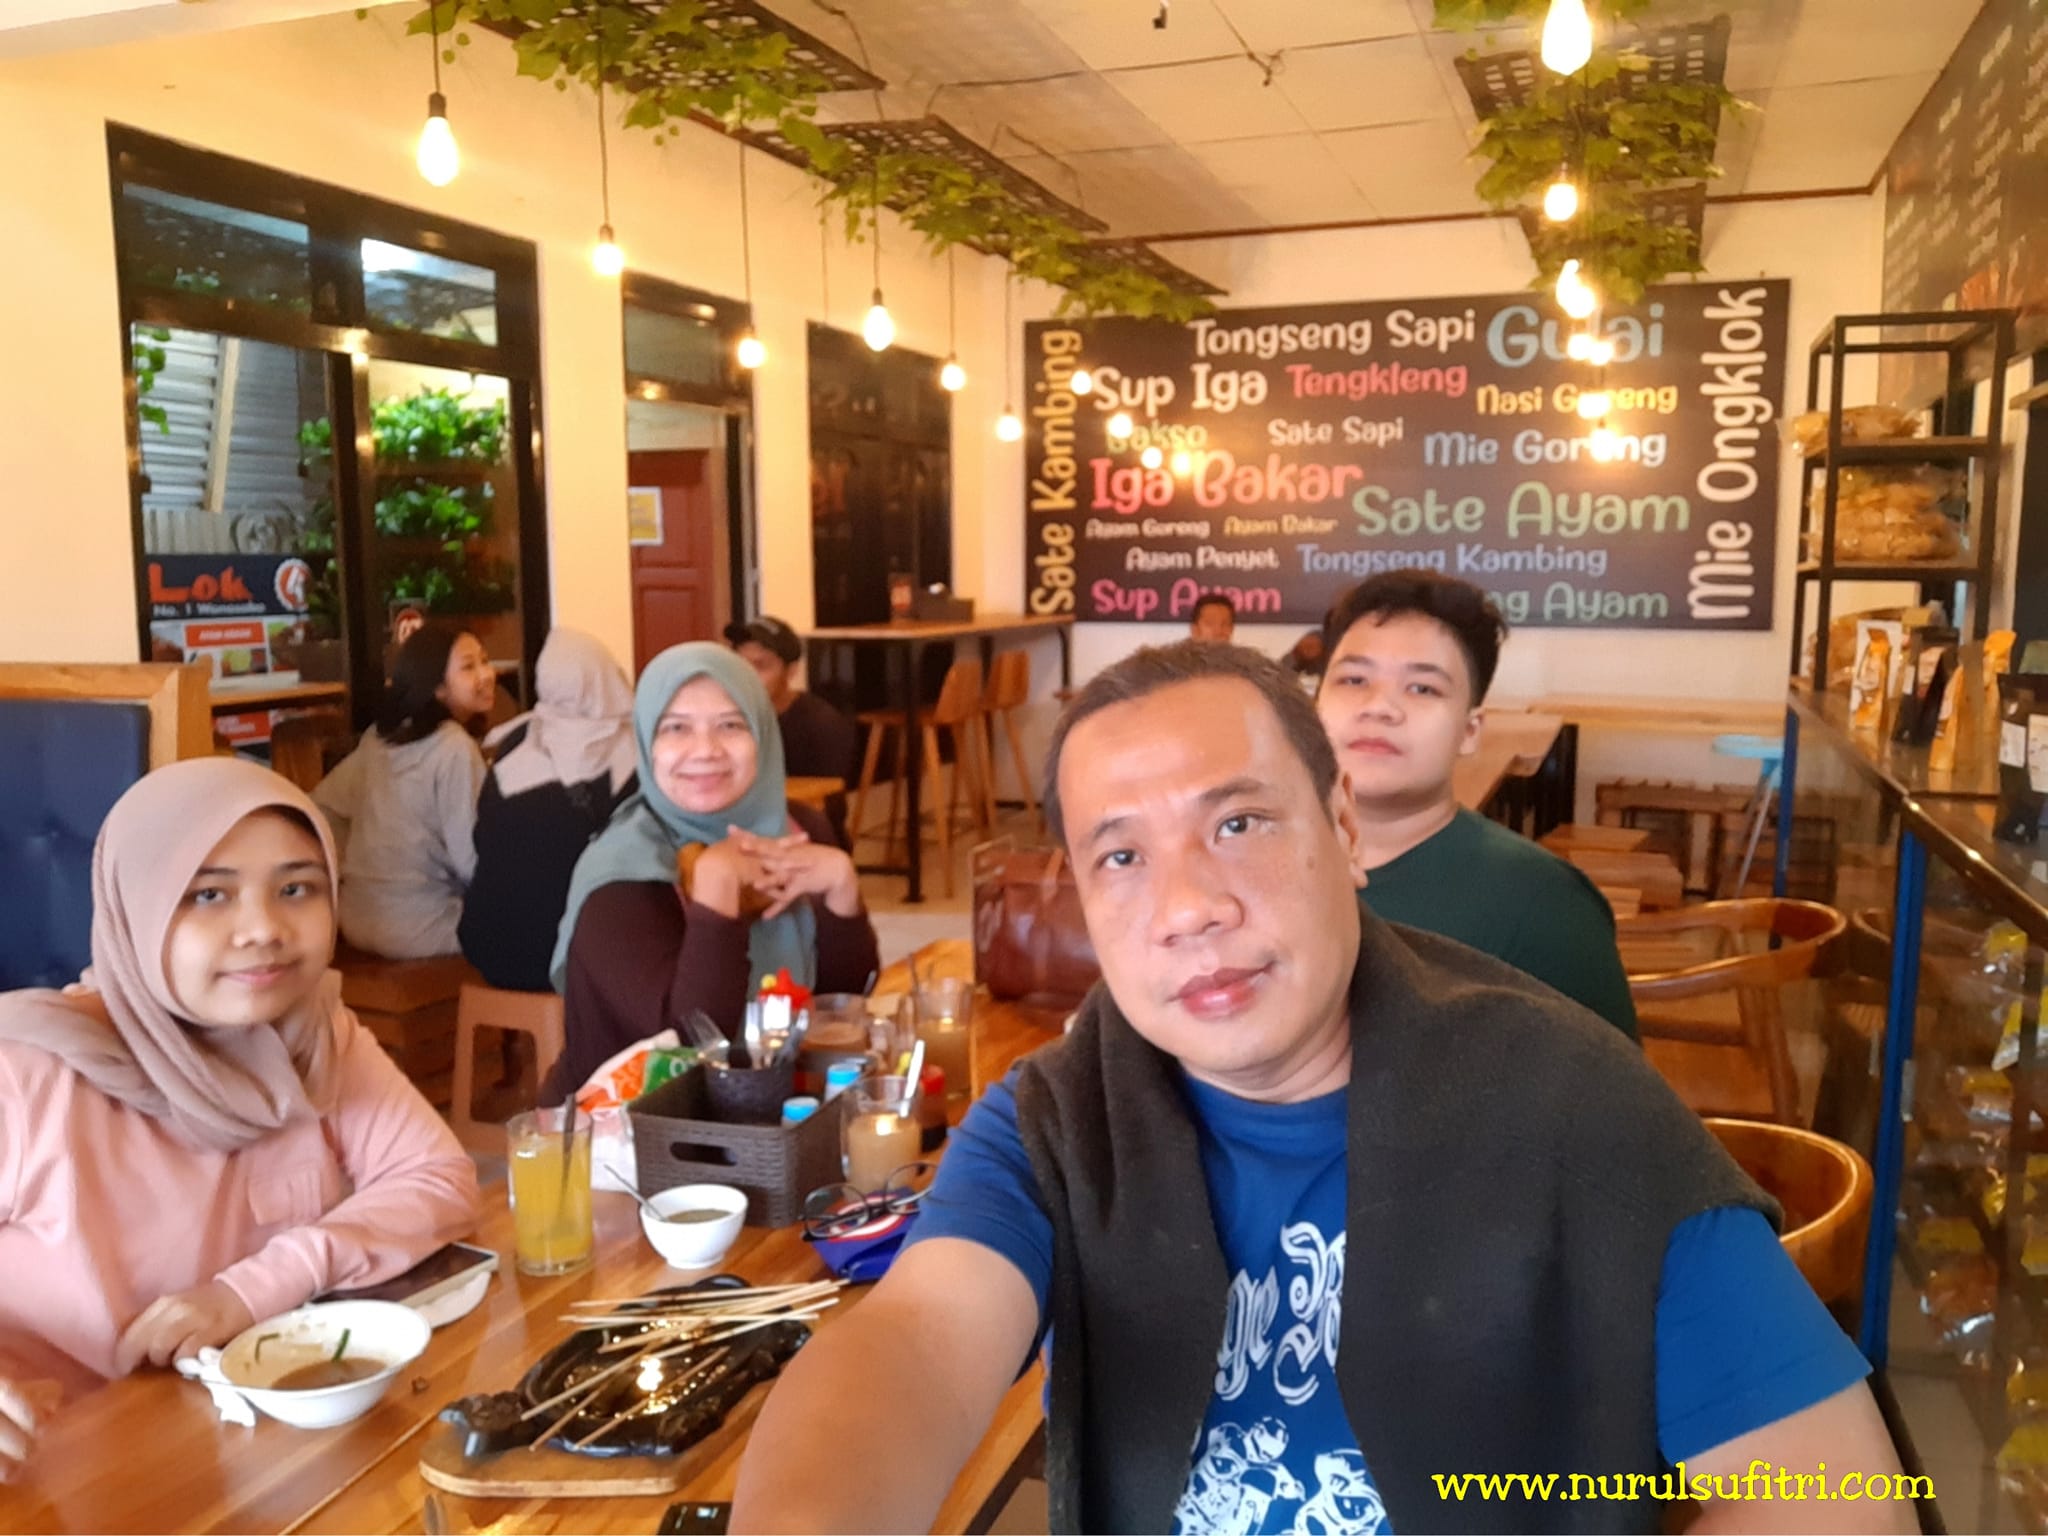 Mie Ongklok, Kuliner Khas Wonosobo yang Unik Memanjakan Lidah Nurul Sufitri Travel Blogger